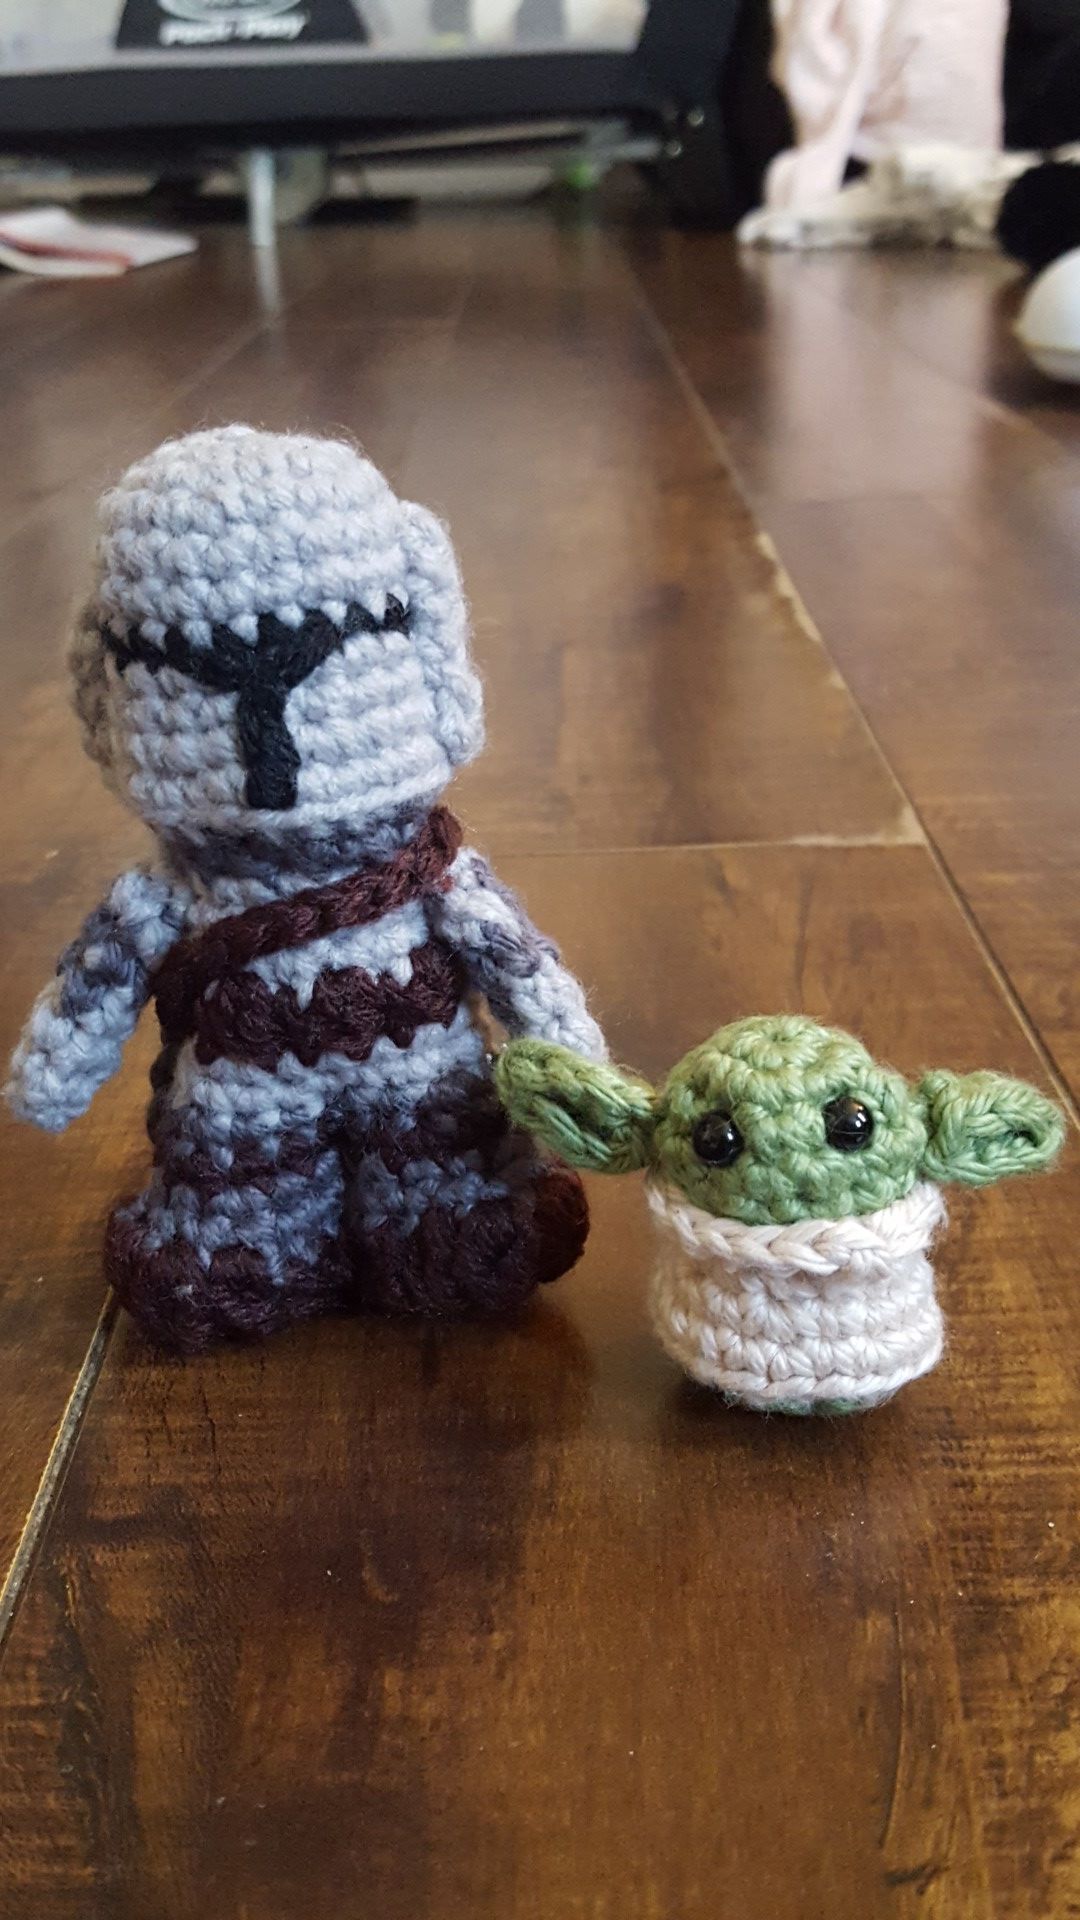 Star Wars Mandalorian and baby Yoda crochet dolls